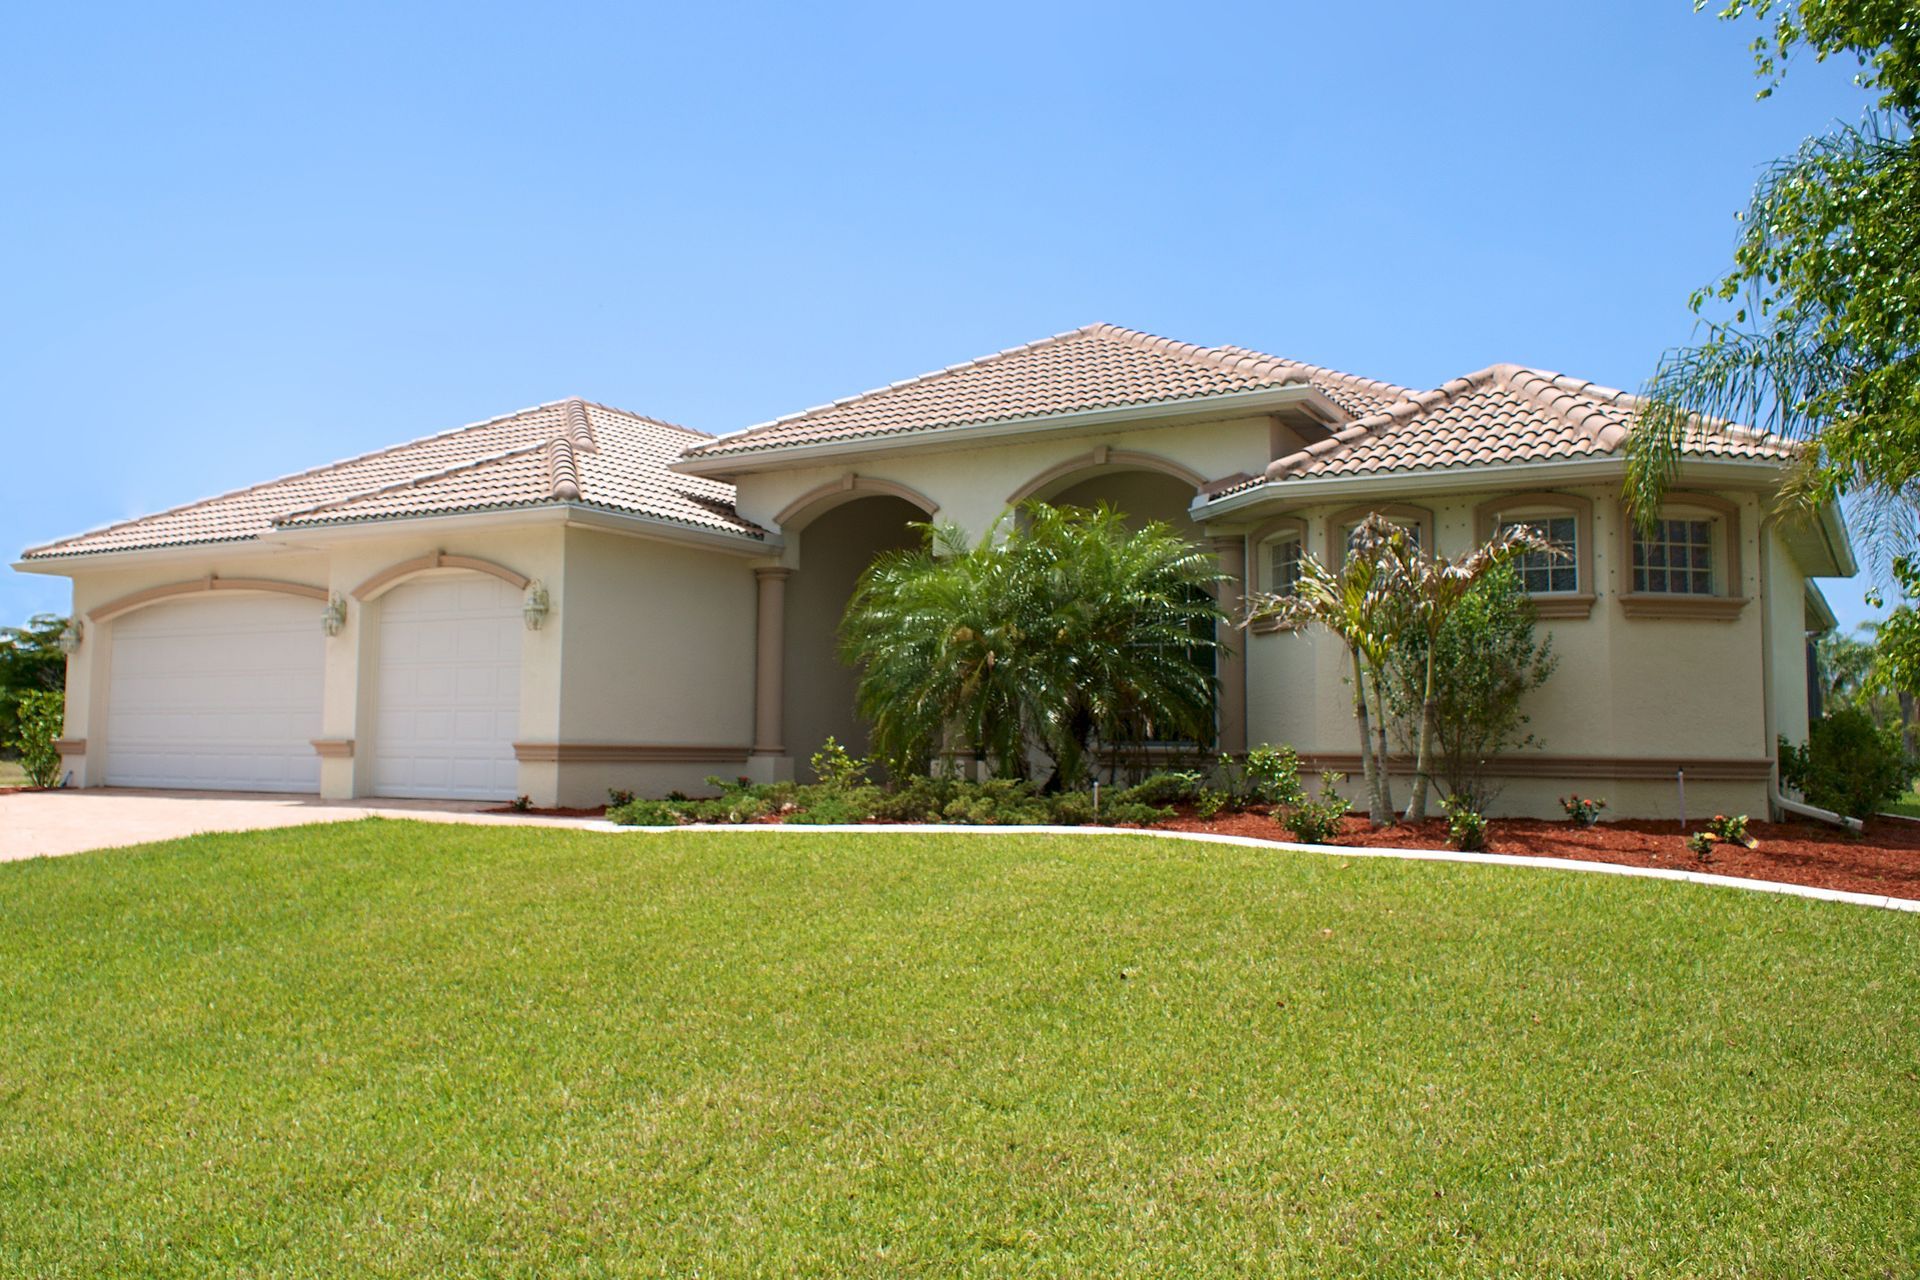 modern home in Florida